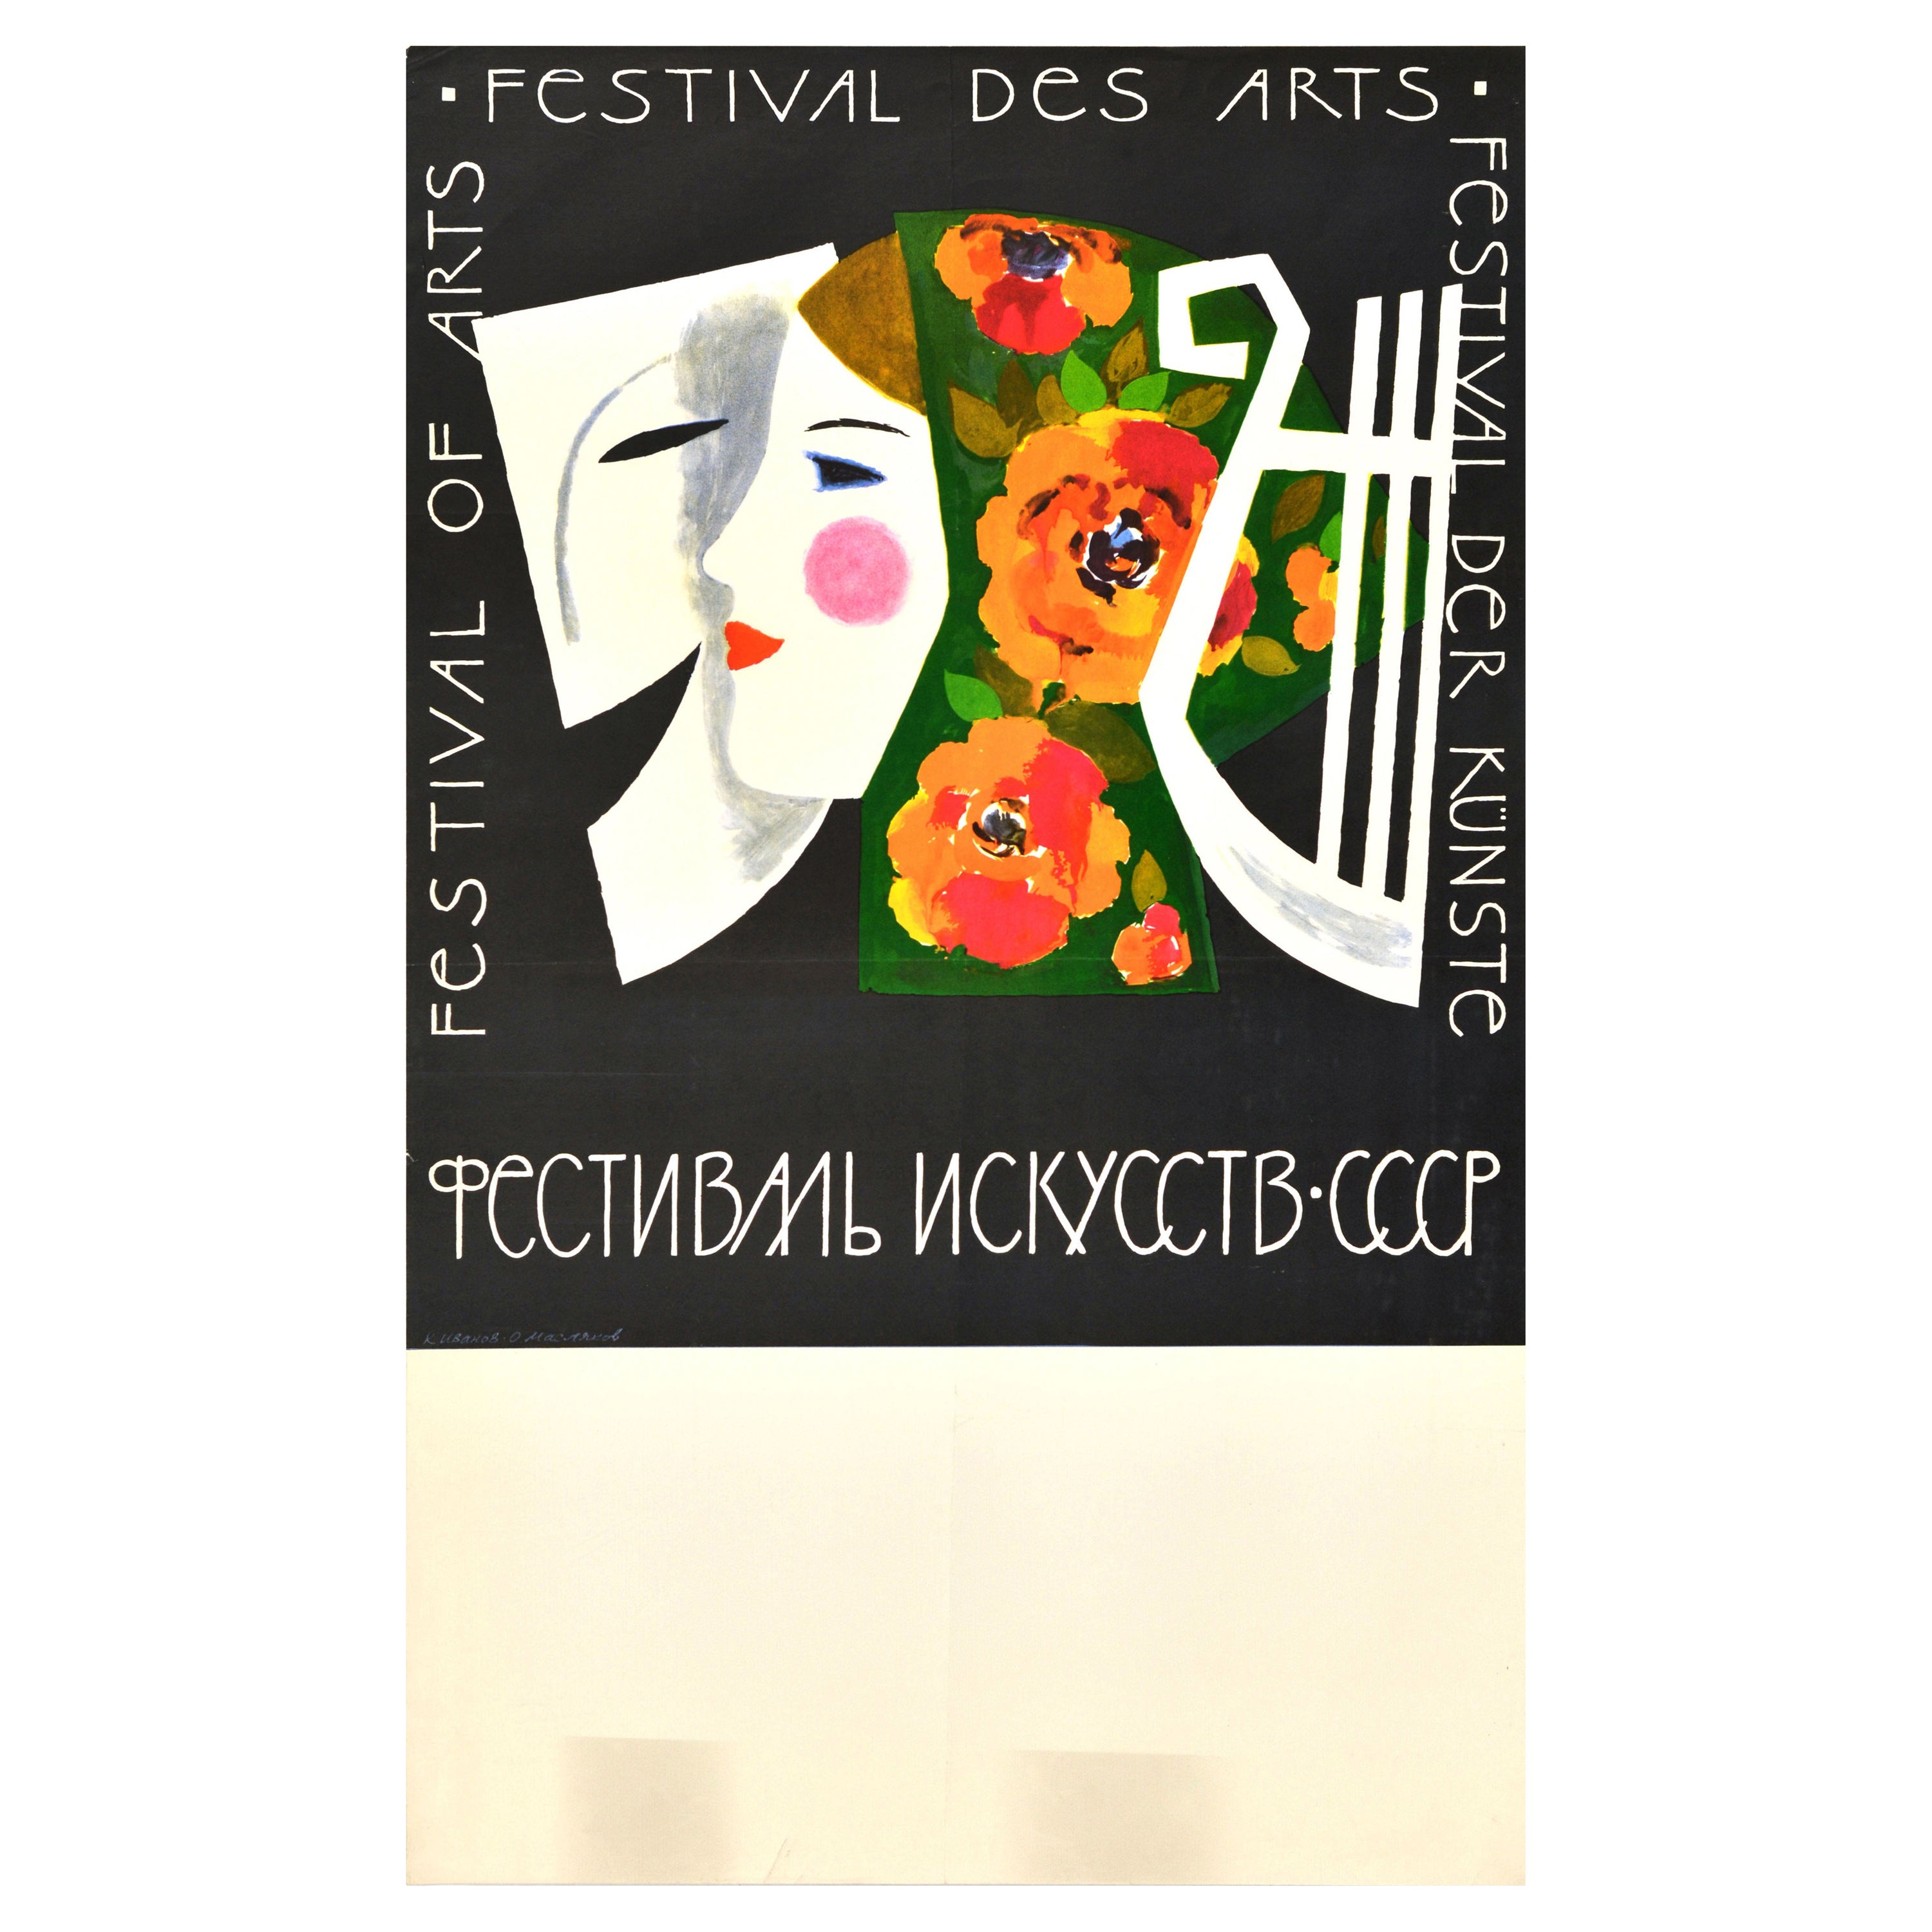 Originales sowjetisches Werbeplakat Festival of Arts Kunst-Design-Maske im Angebot